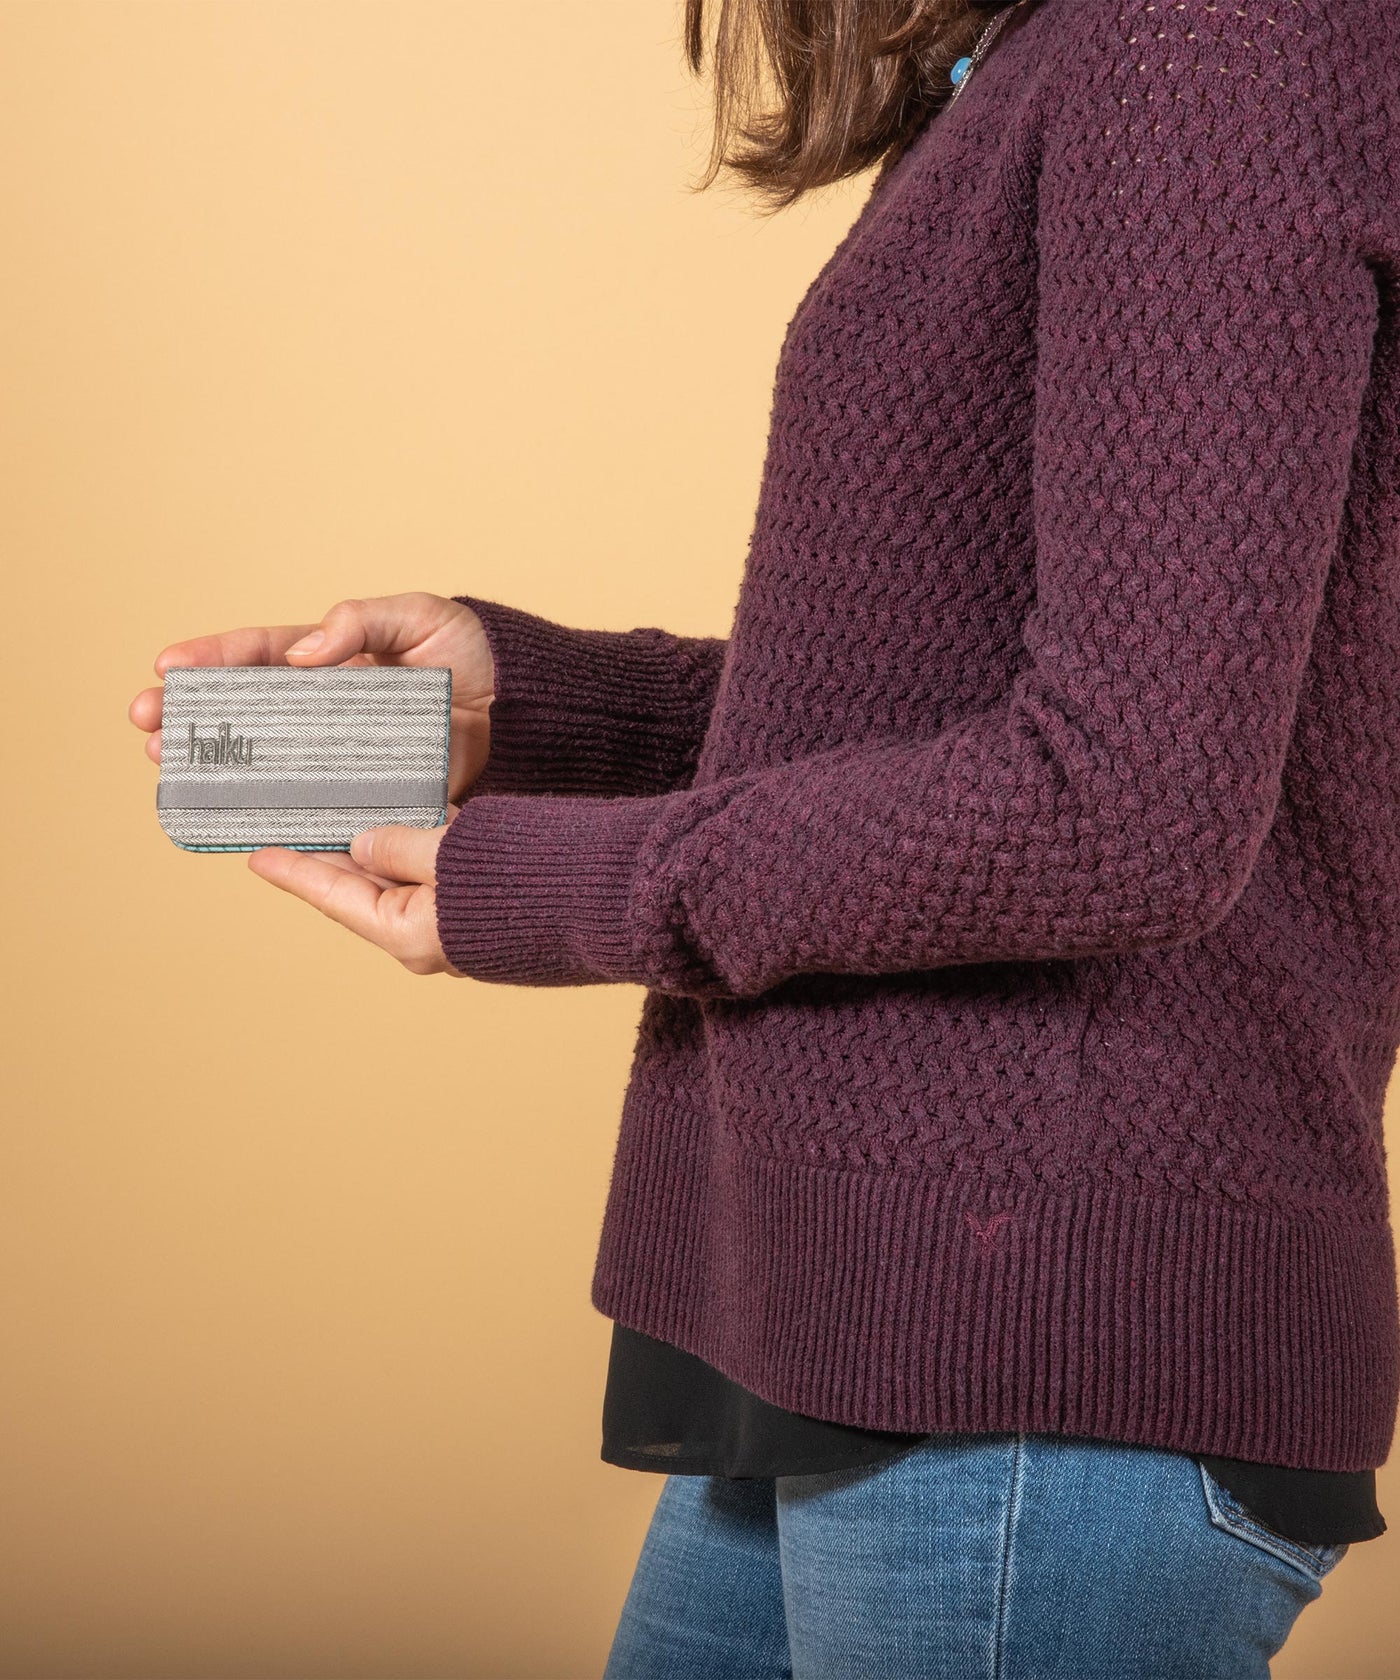 Haiku RFID Mini Wallet 2.0